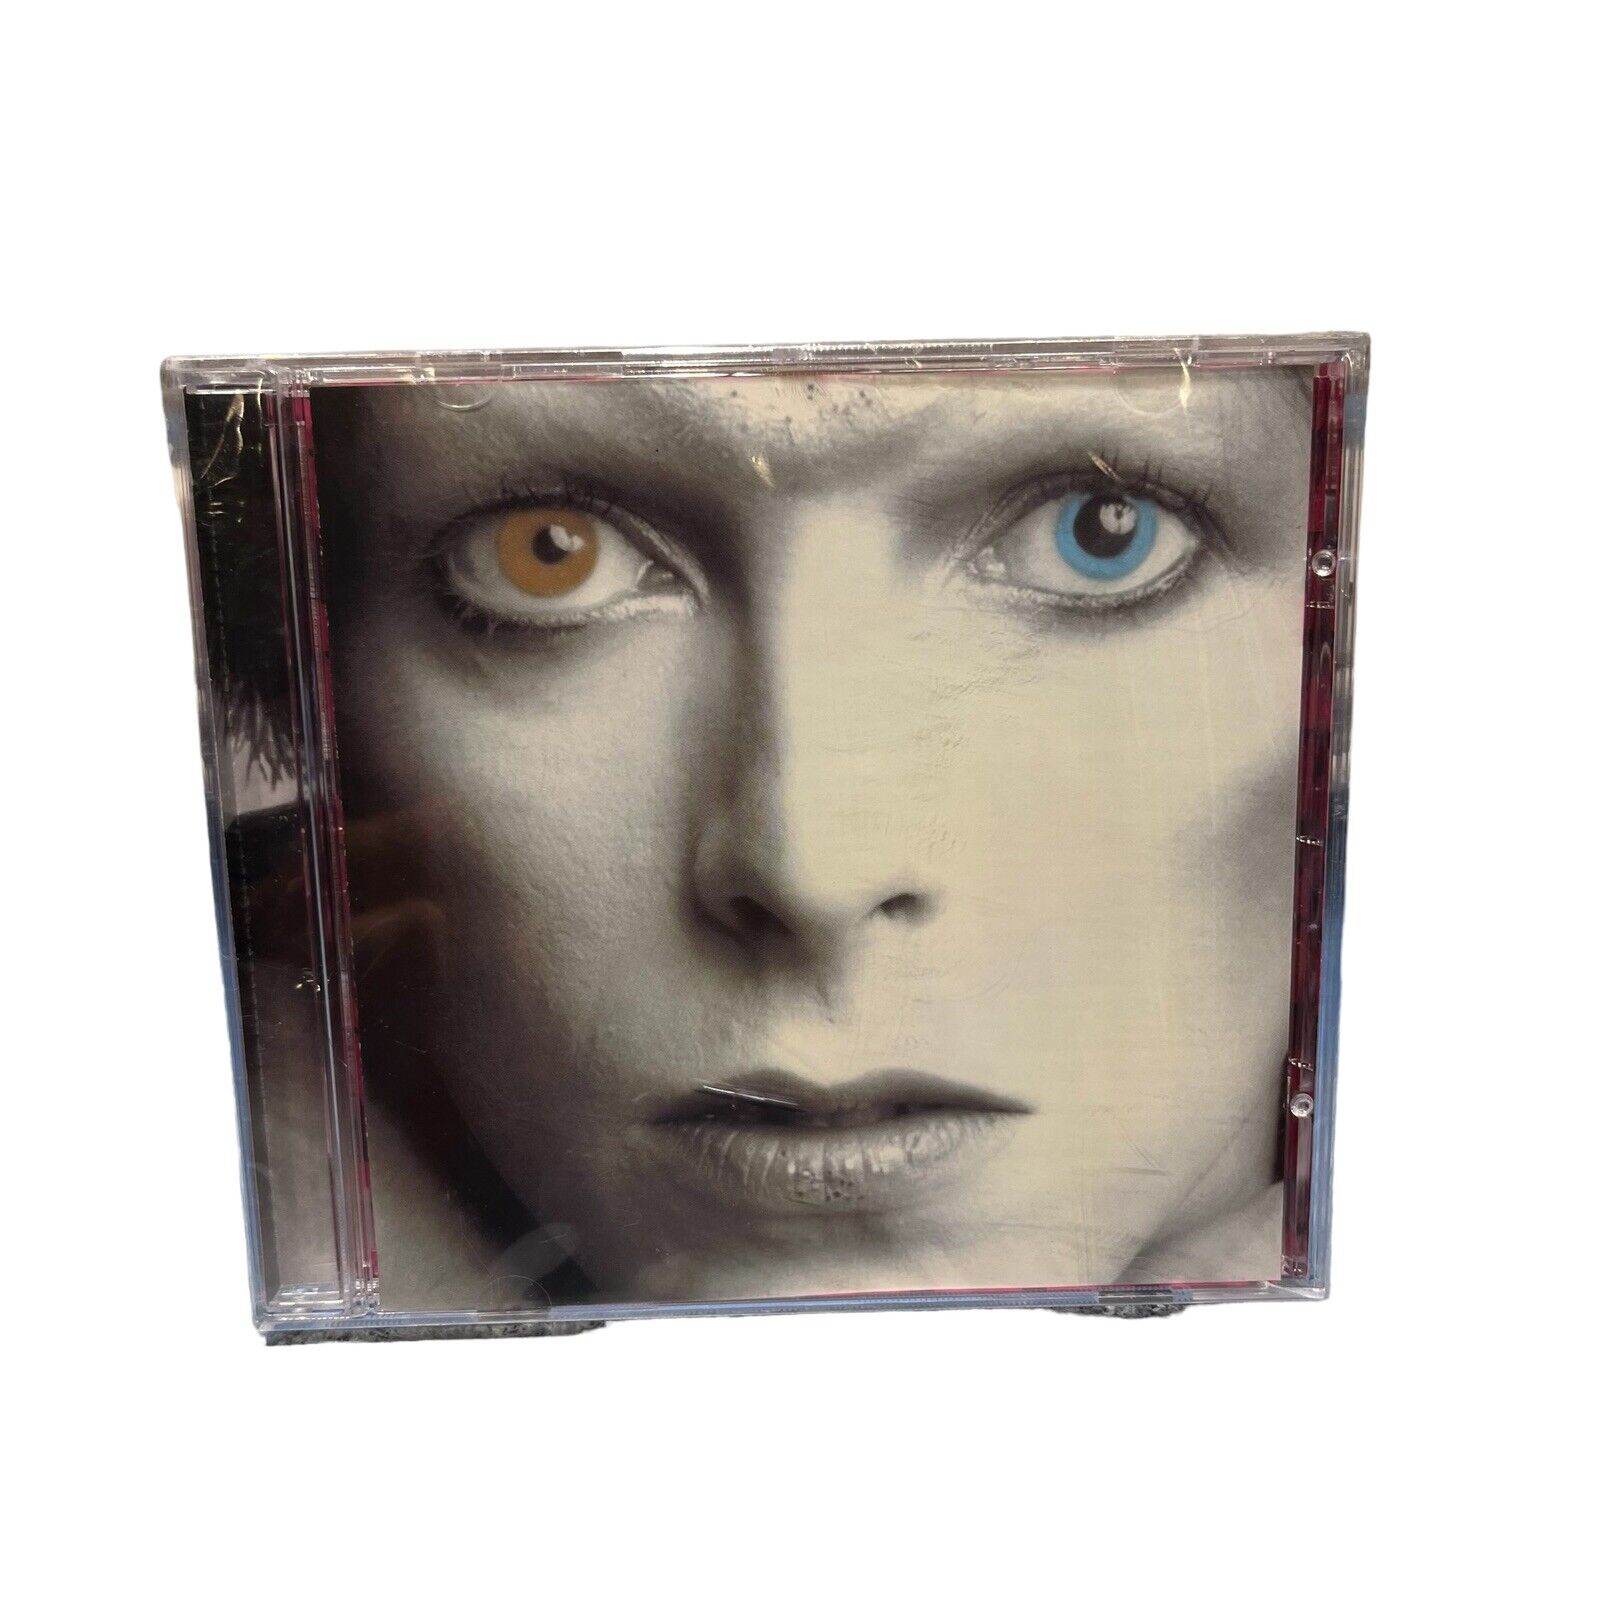 Starman Uncut 2003 CD Various Artists David Bowie Covers 